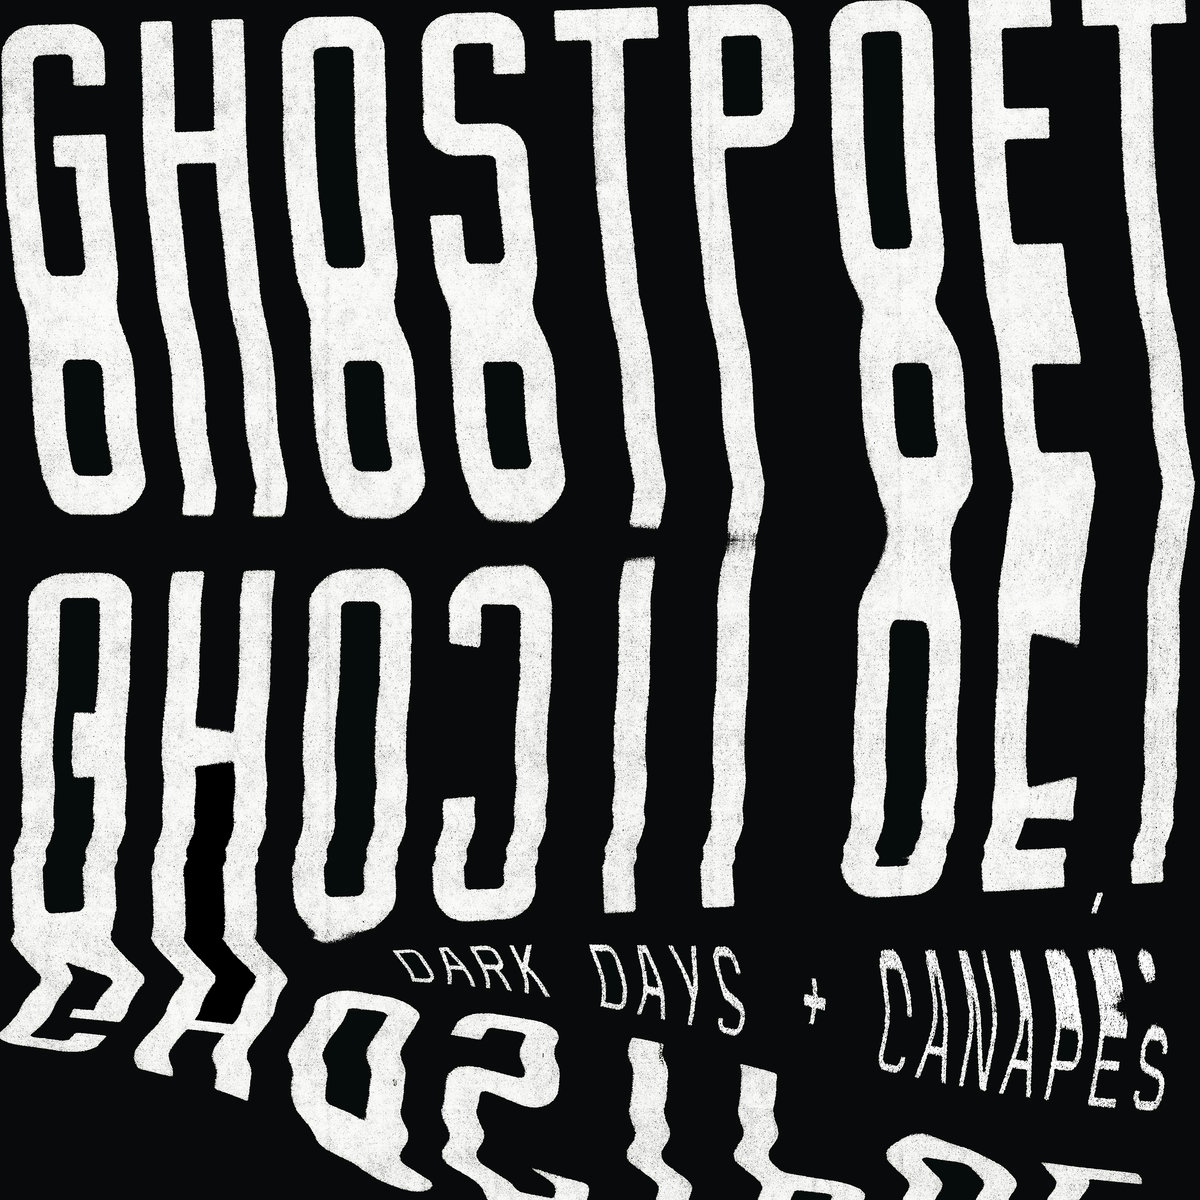 Album artwork for Album artwork for Dark Days and Canapes (Black Friday 2021) by Ghostpoet by Dark Days and Canapes (Black Friday 2021) - Ghostpoet